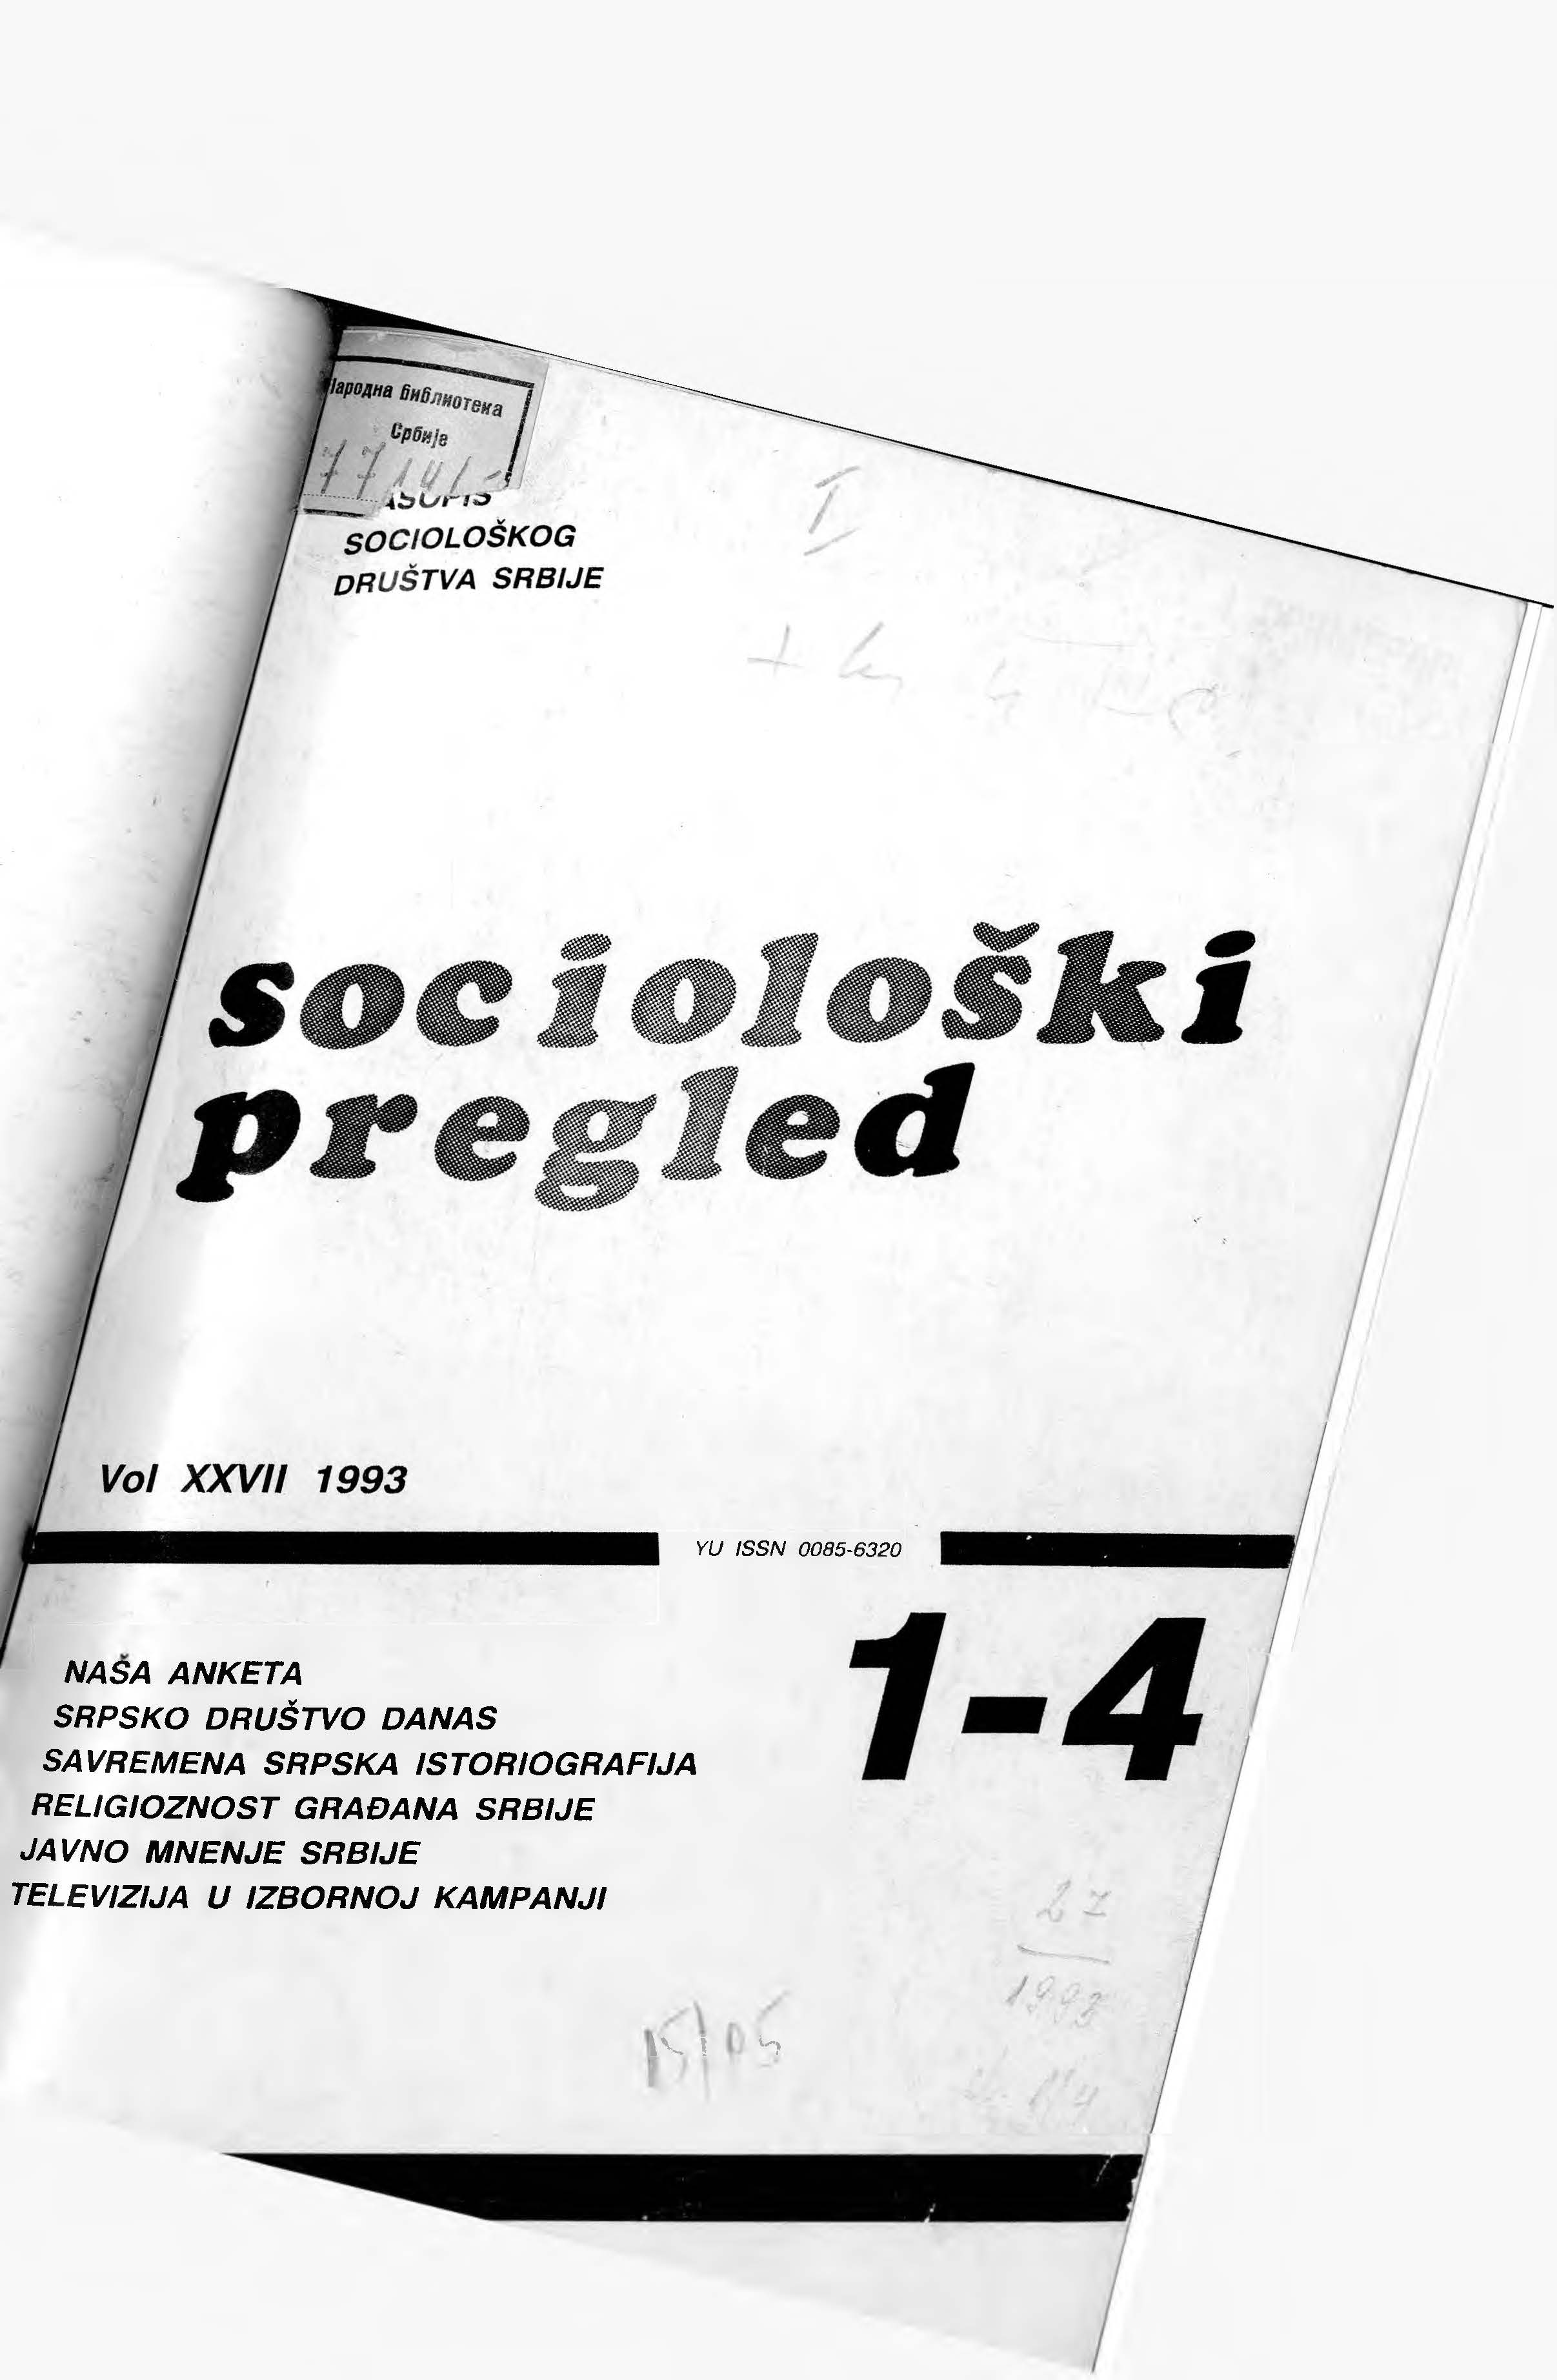 Sociological Theory and Analysis of Yugoslavia